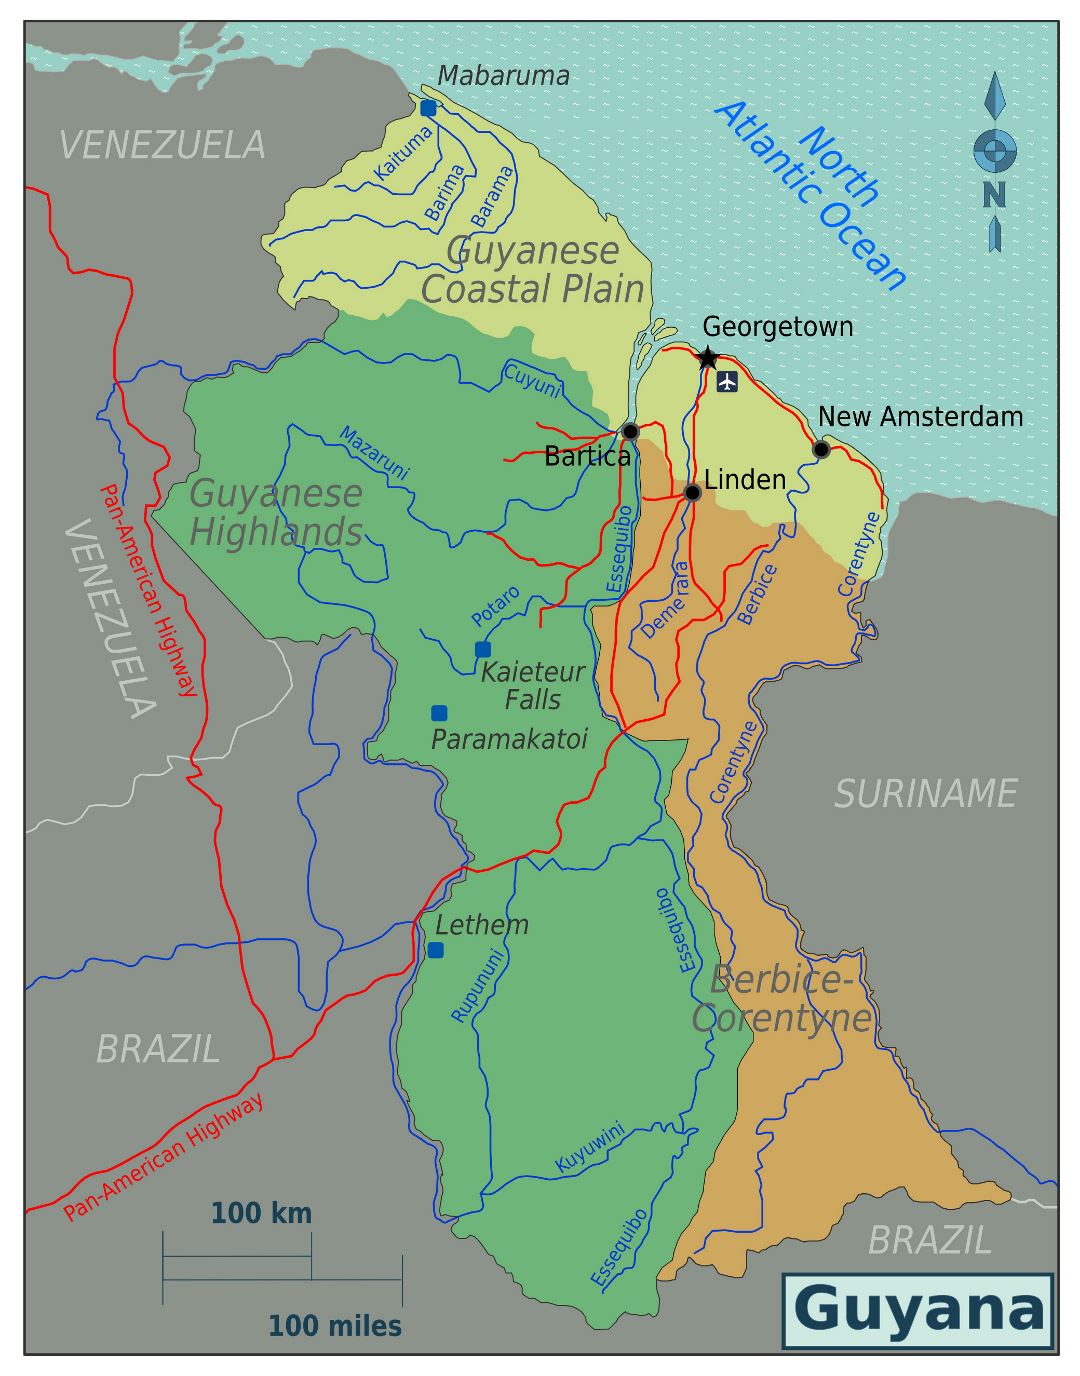 Large regions map of Guyana